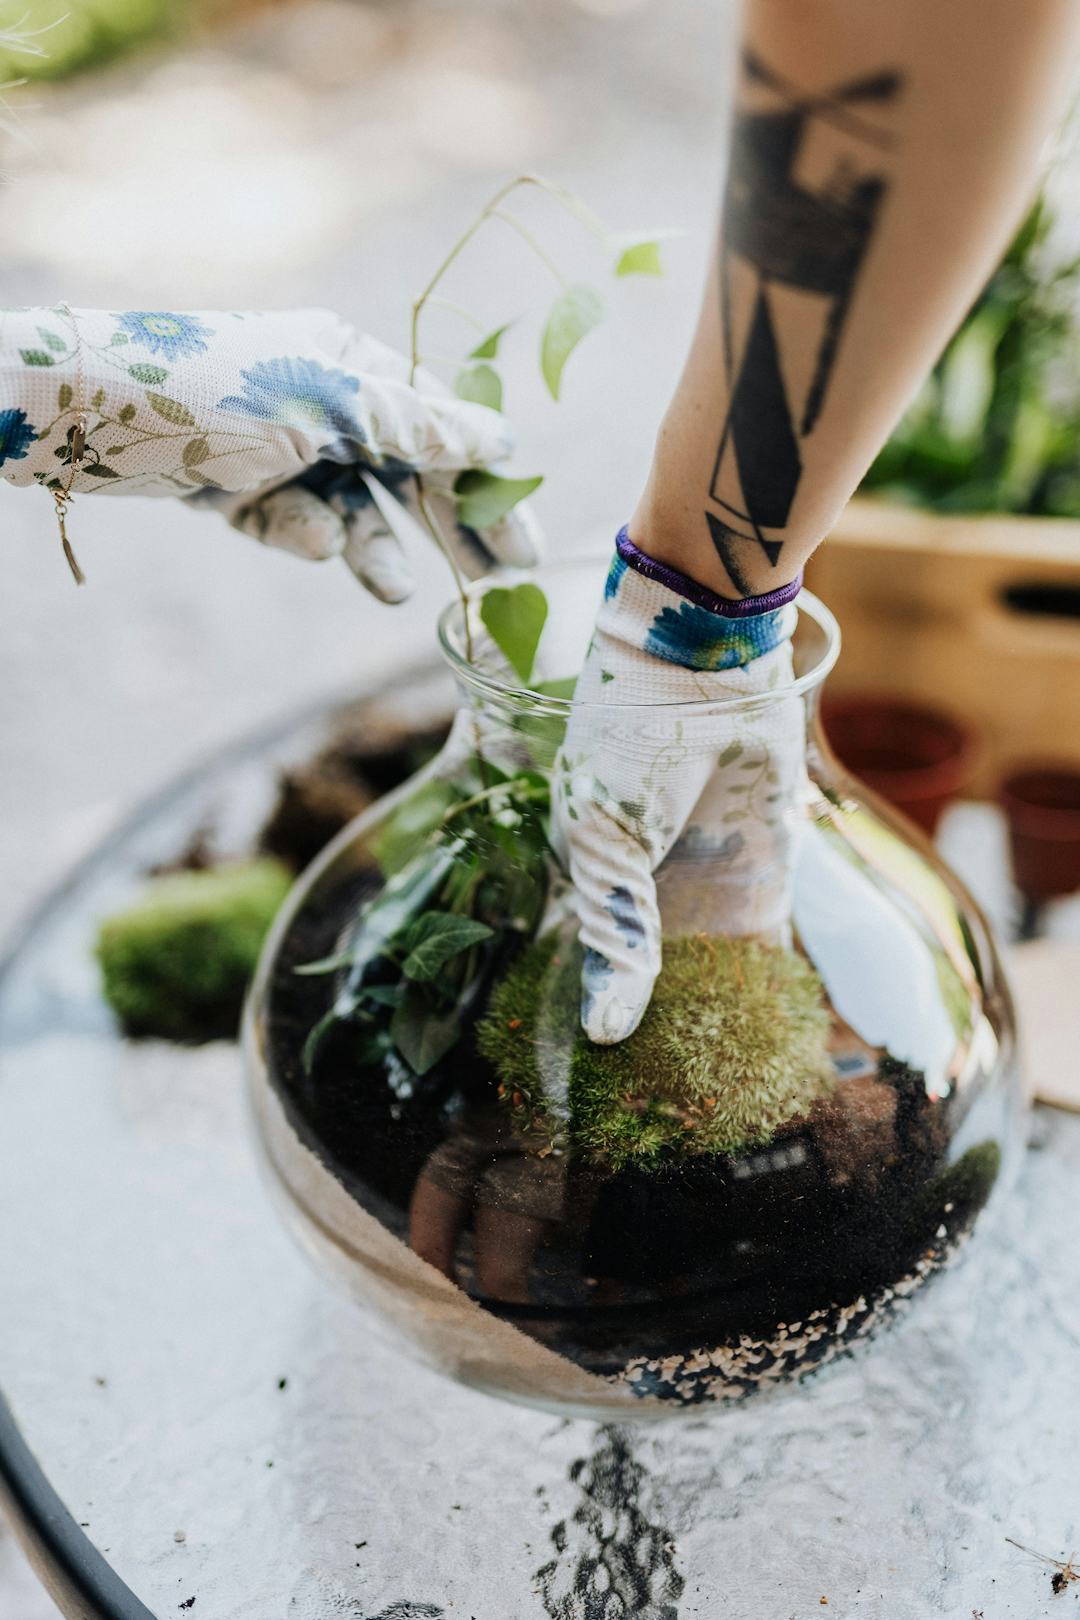 Adding moss to a terrarium (Image source: Pexels Karolina Grabowska)